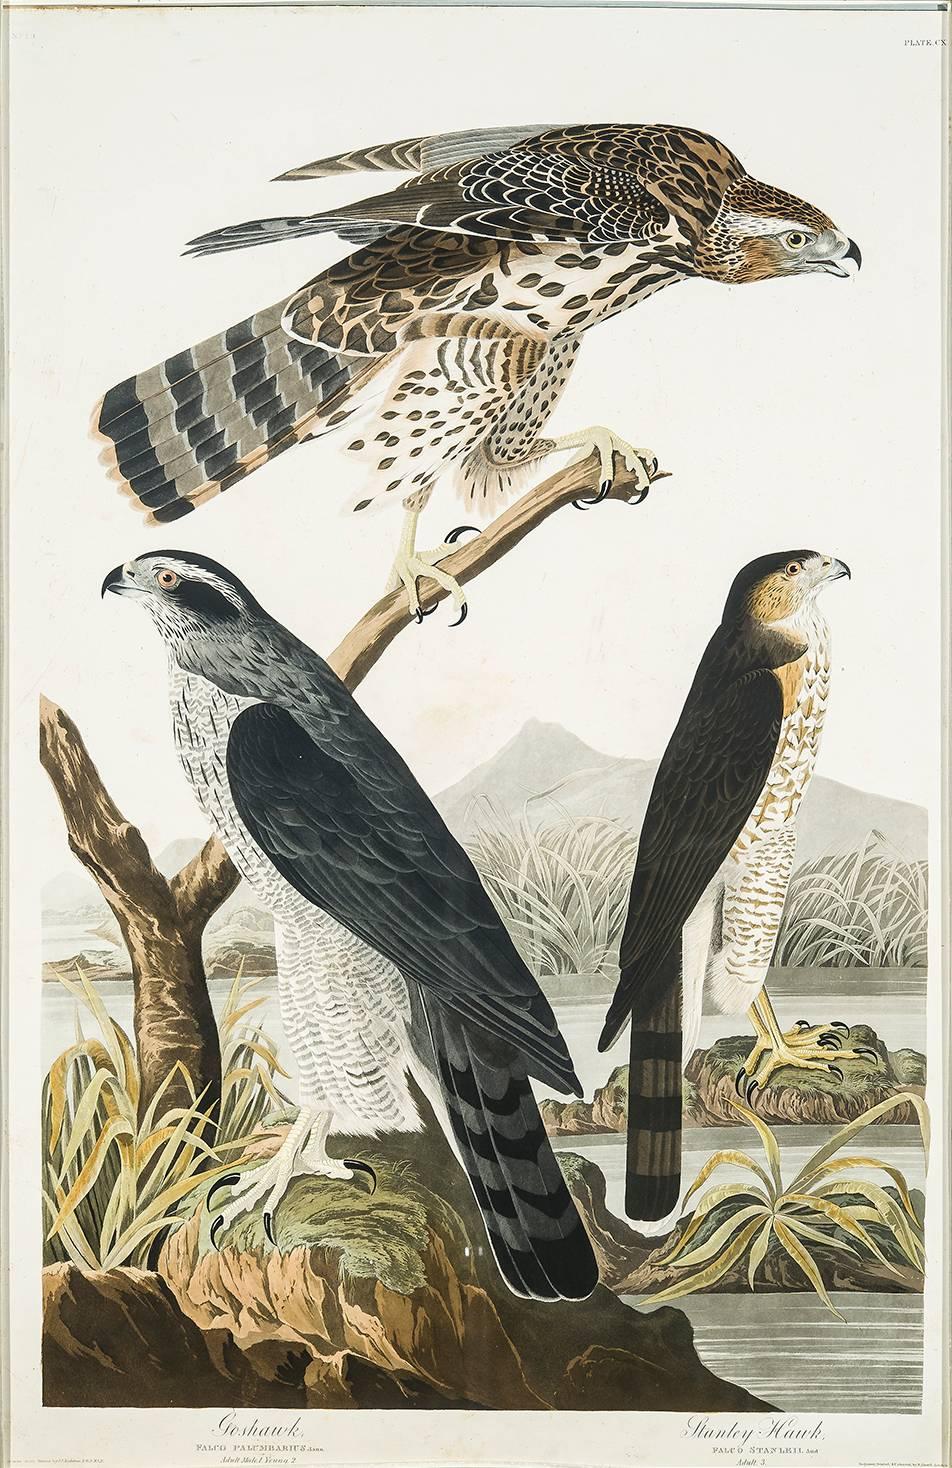 John James Audubon Animal Print - Goshawk / Stanley Hawk [Plate 141]